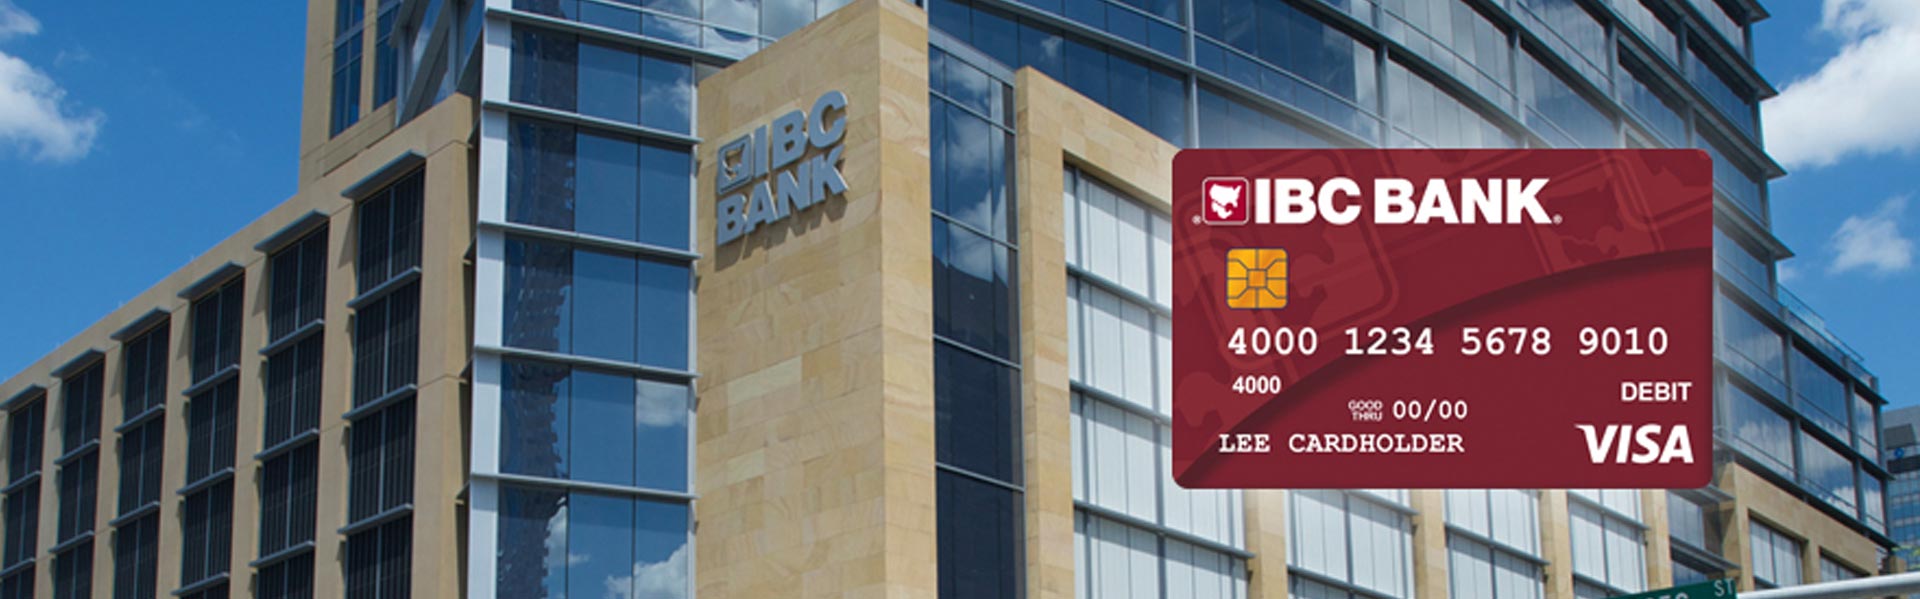 IBC Bank Visa Debit Card